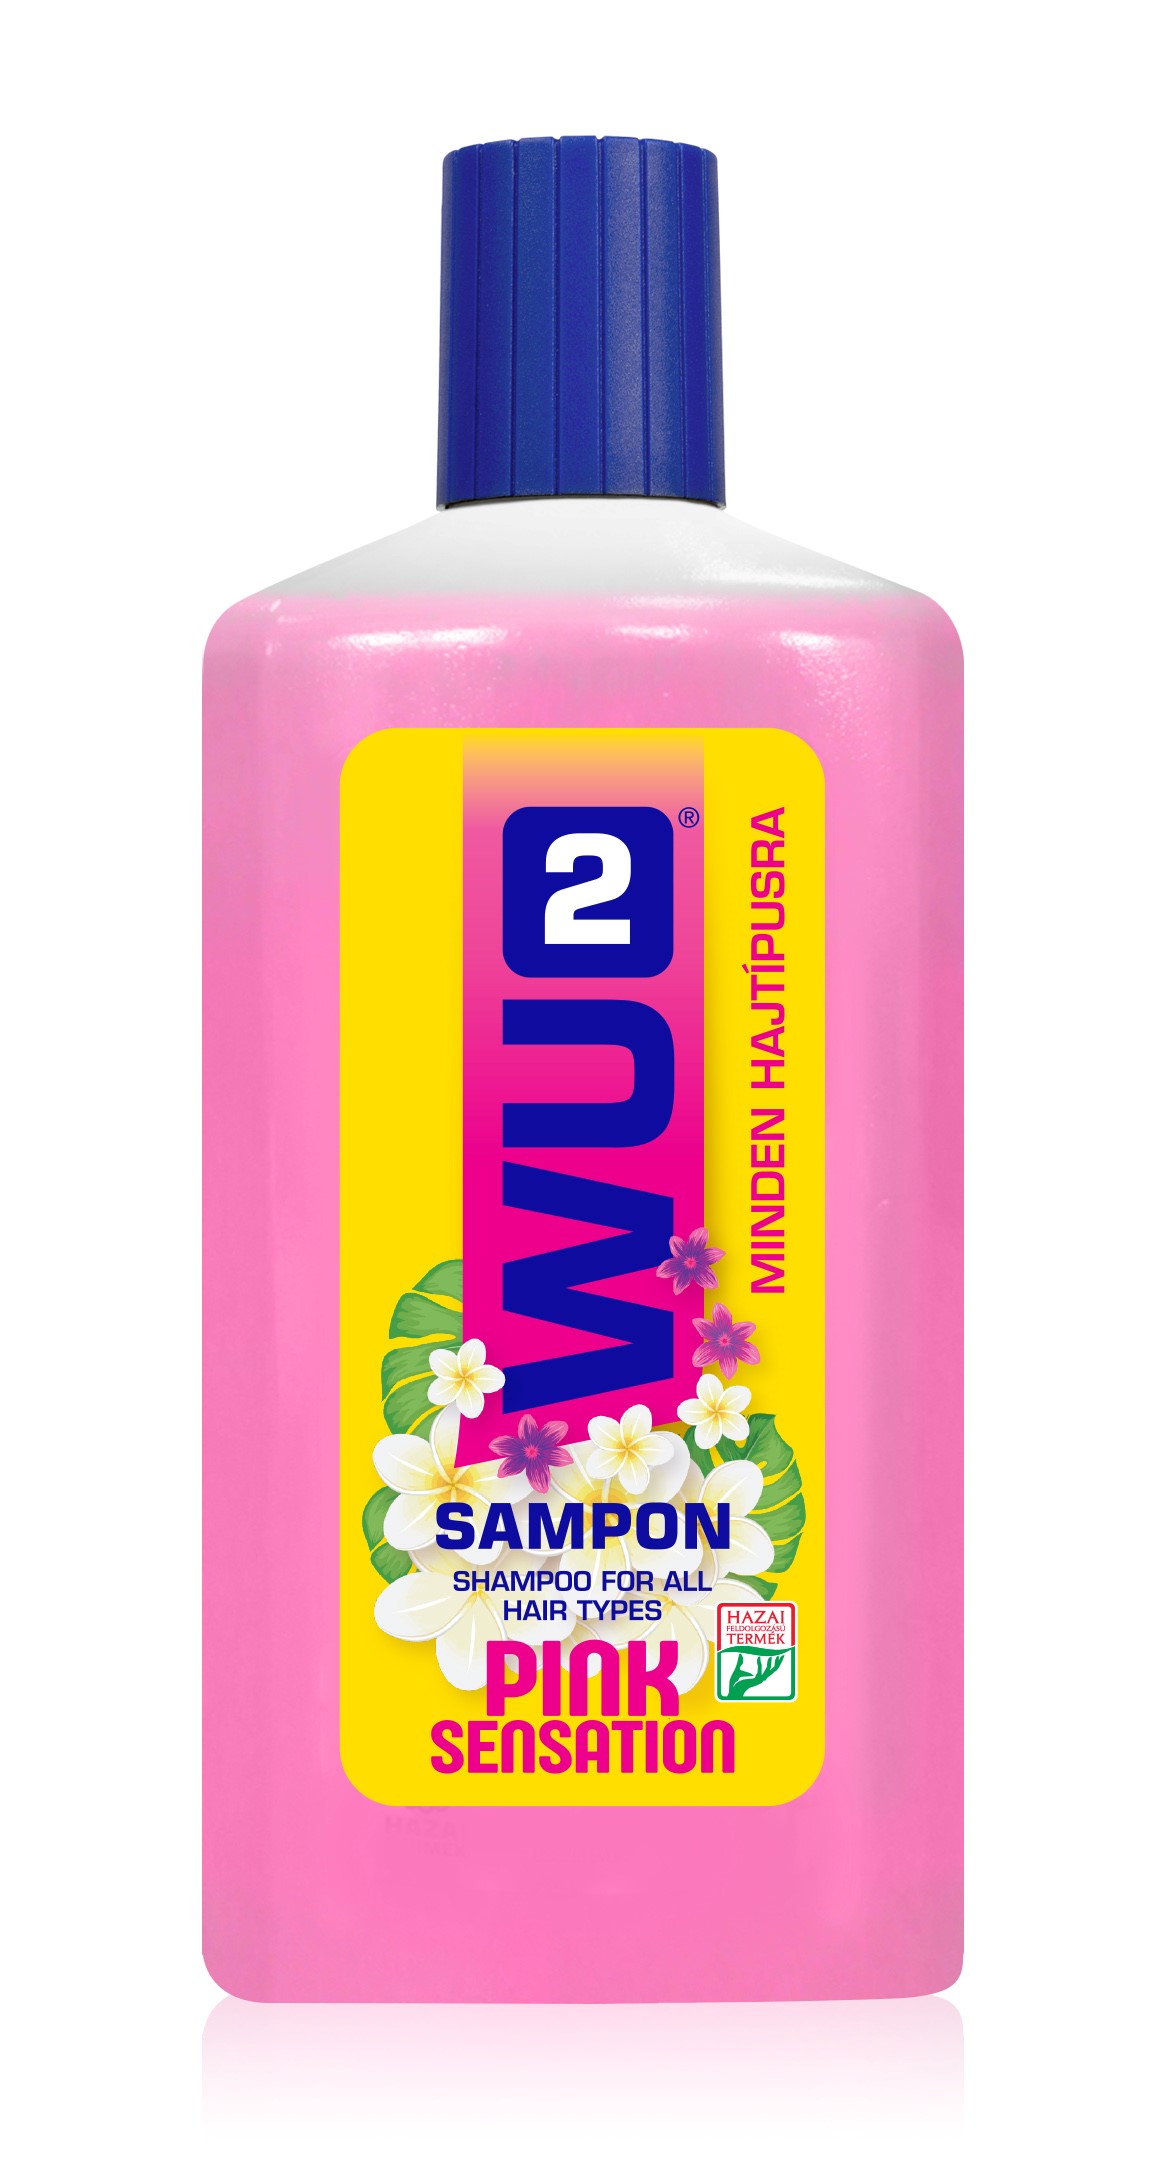 WU2 Pink Sensation sampon 1 liter